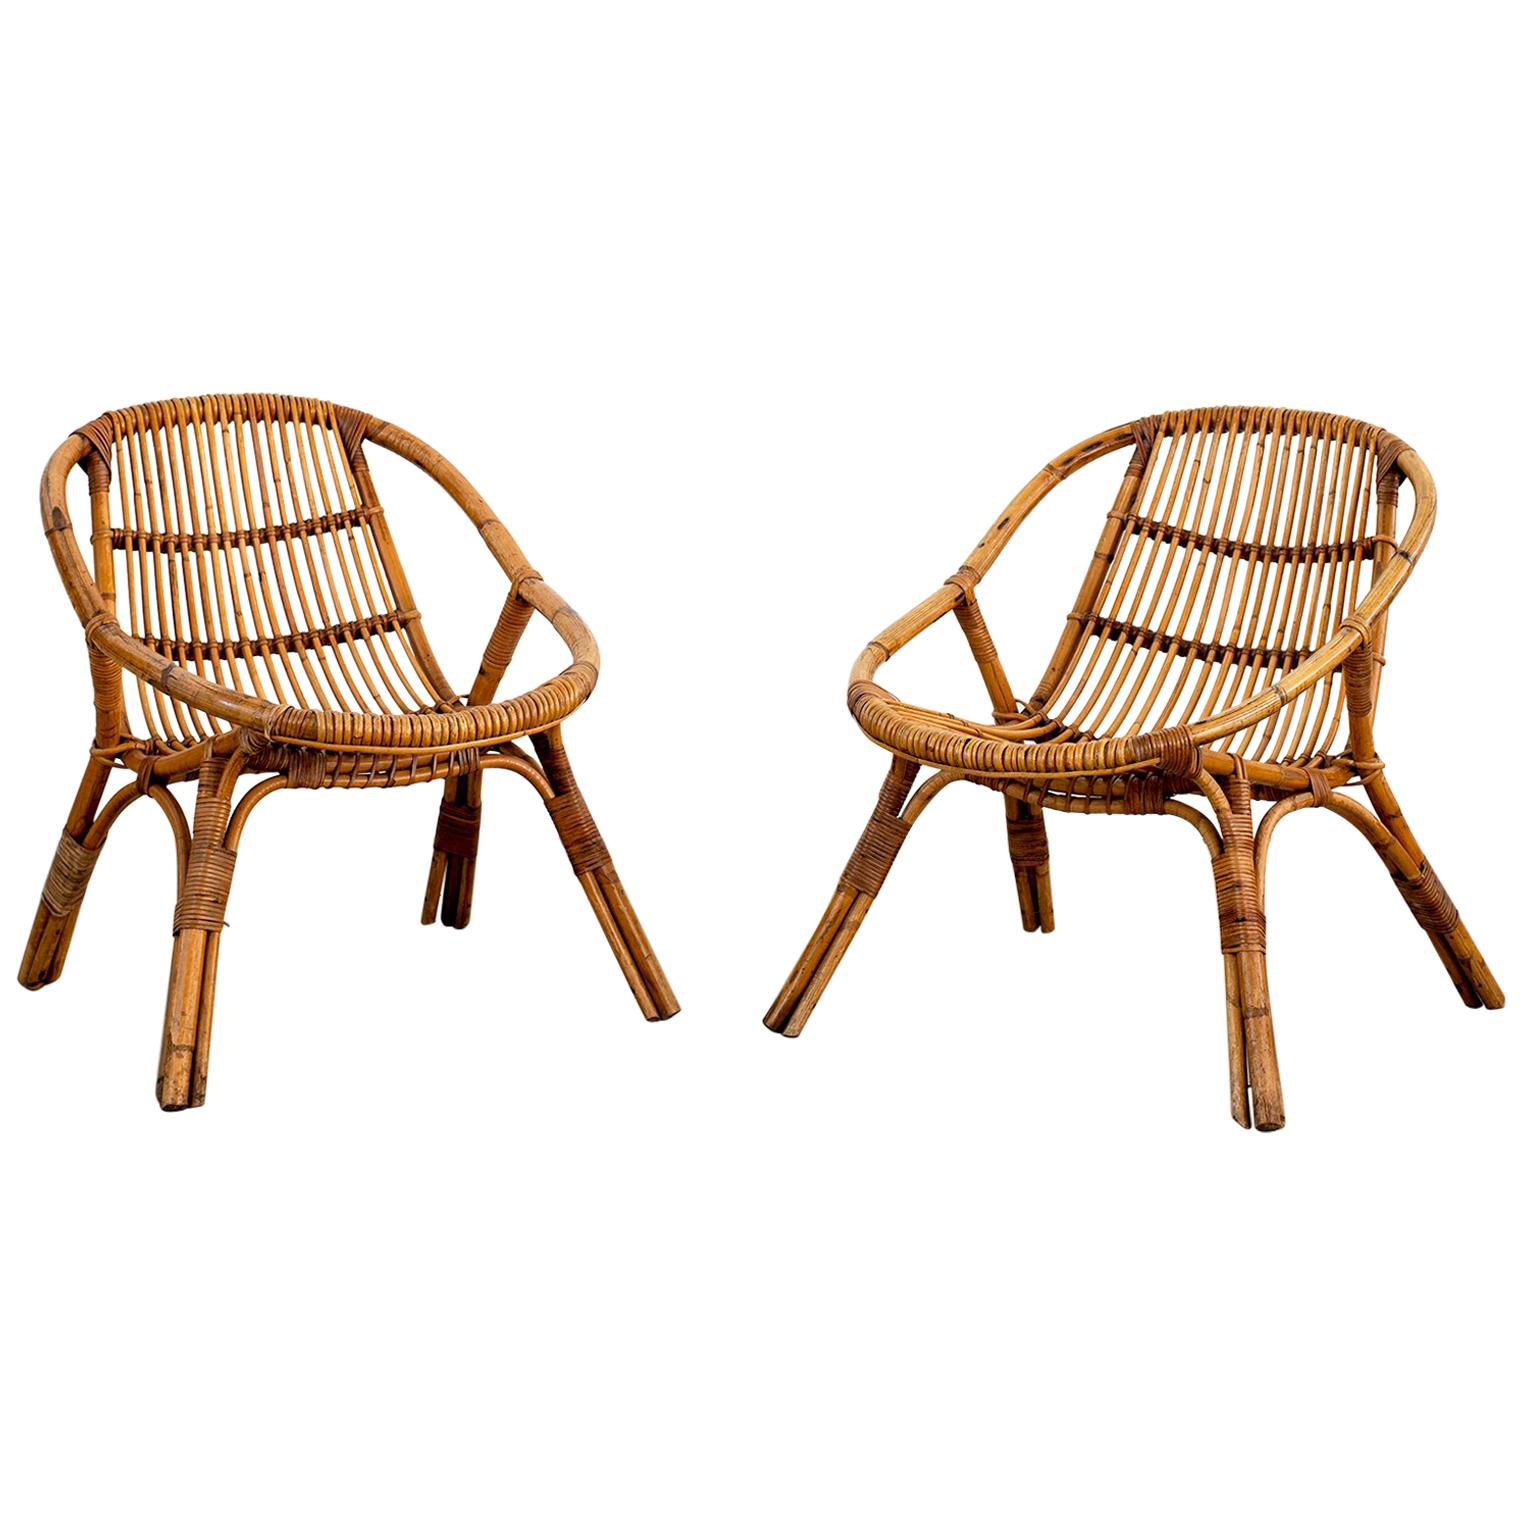 Italian Rattan and Bamboo Chairs